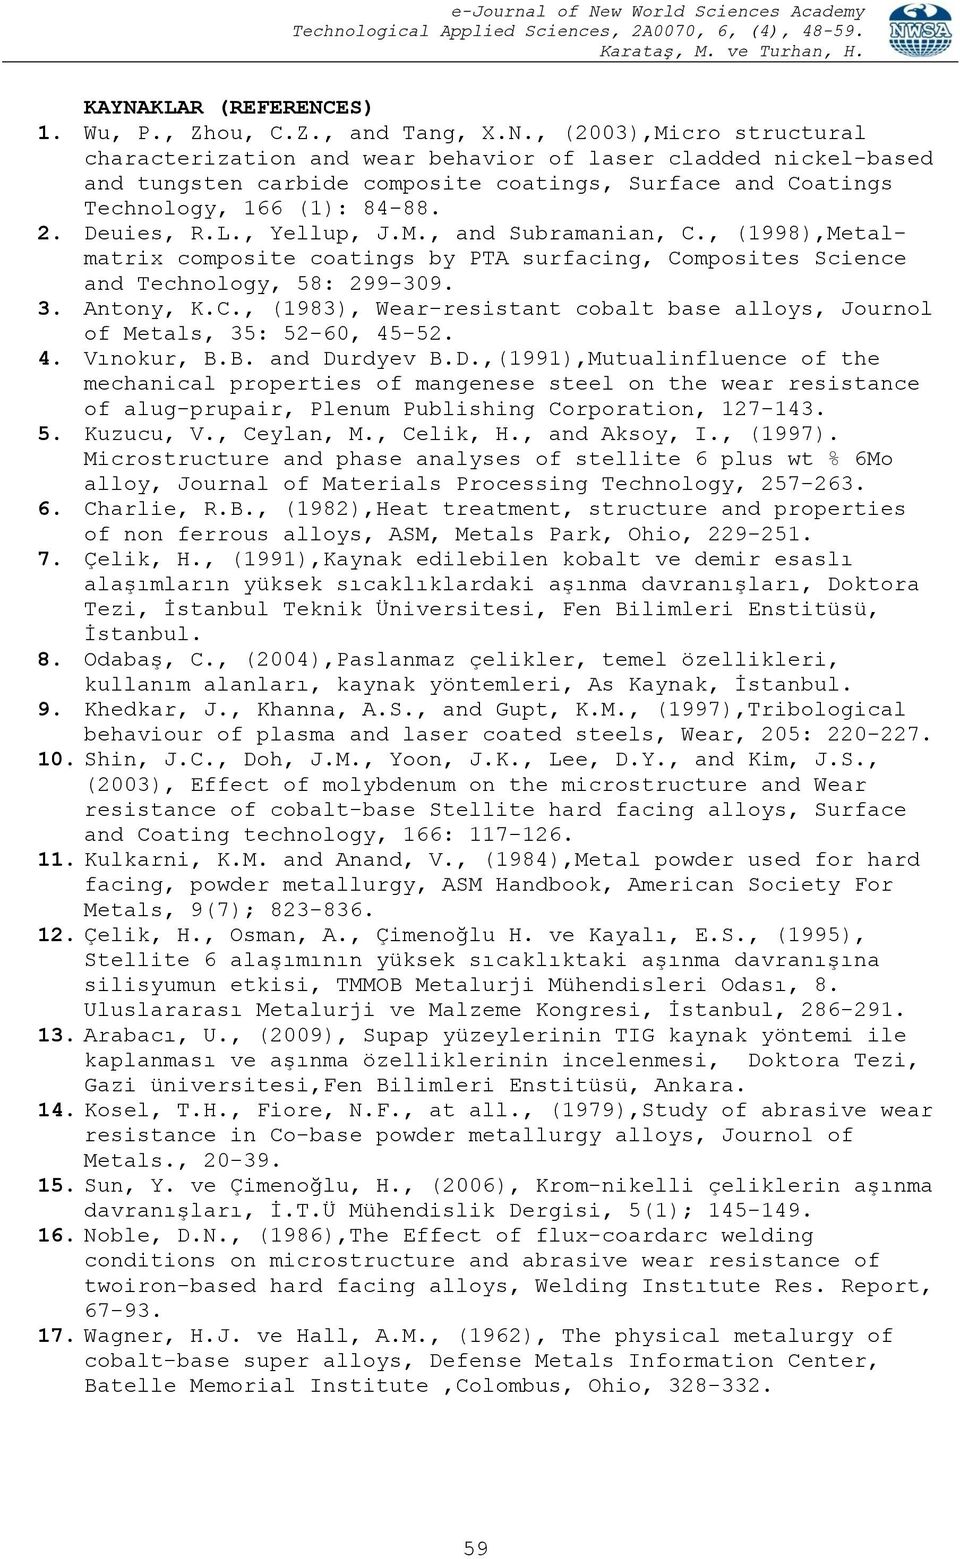 4. Vınokur, B.B. and Durdyev B.D.,(1991),Mutualinfluence of the mechanical properties of mangenese steel on the wear resistance of alug-prupair, Plenum Publishing Corporation, 127-143. 5. Kuzucu, V.